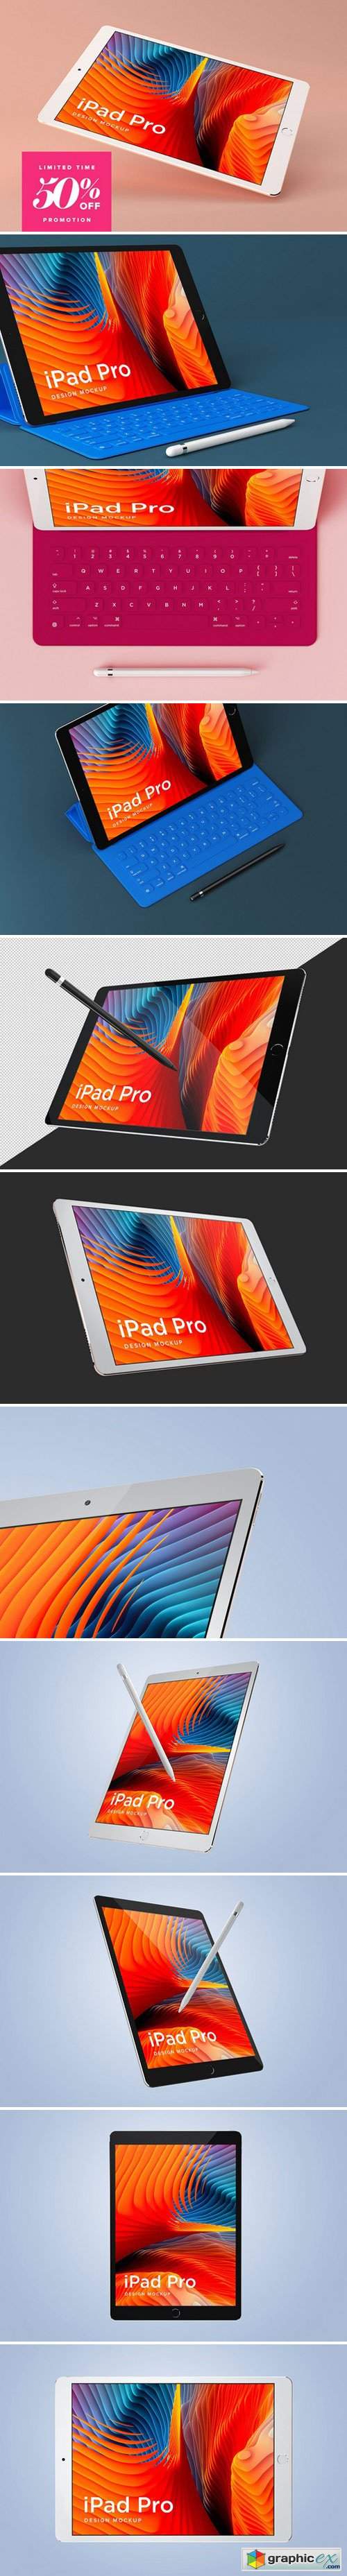 iPad Pro Design Mockup